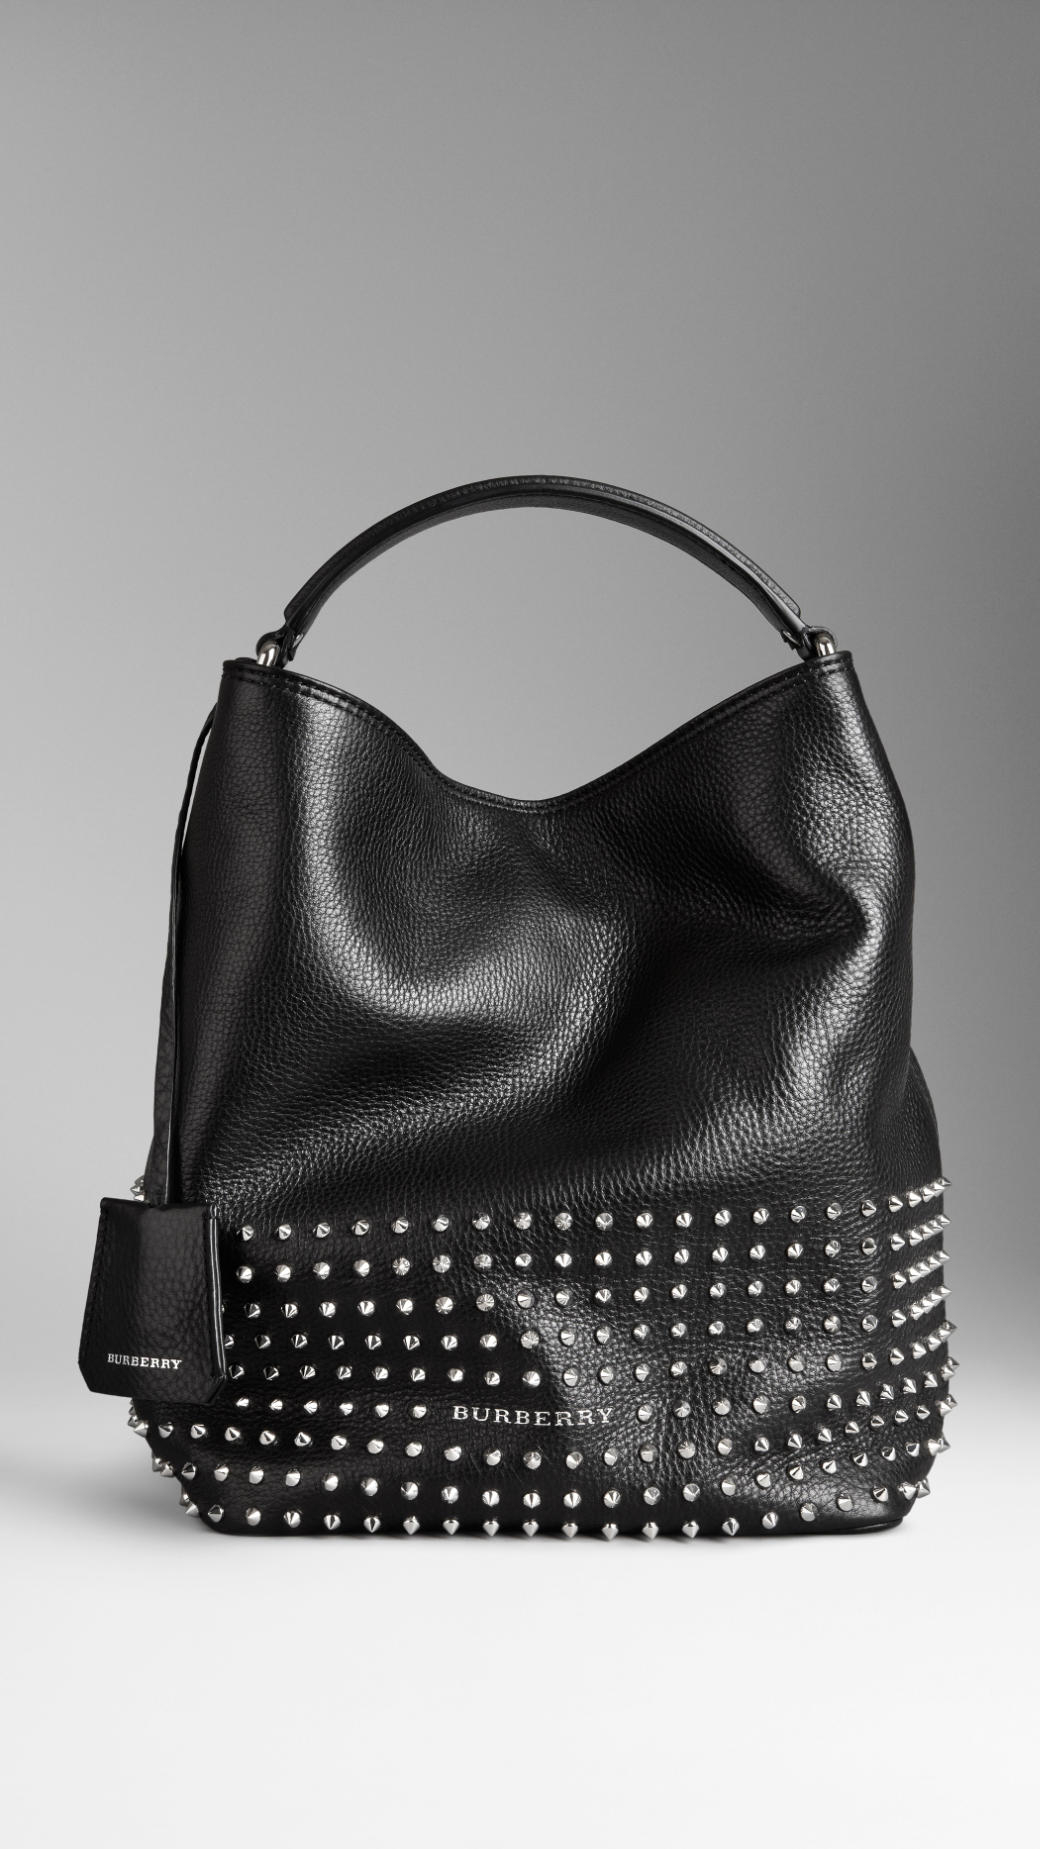 Burberry Medium Studded Leather Hobo Bag in Black - Lyst